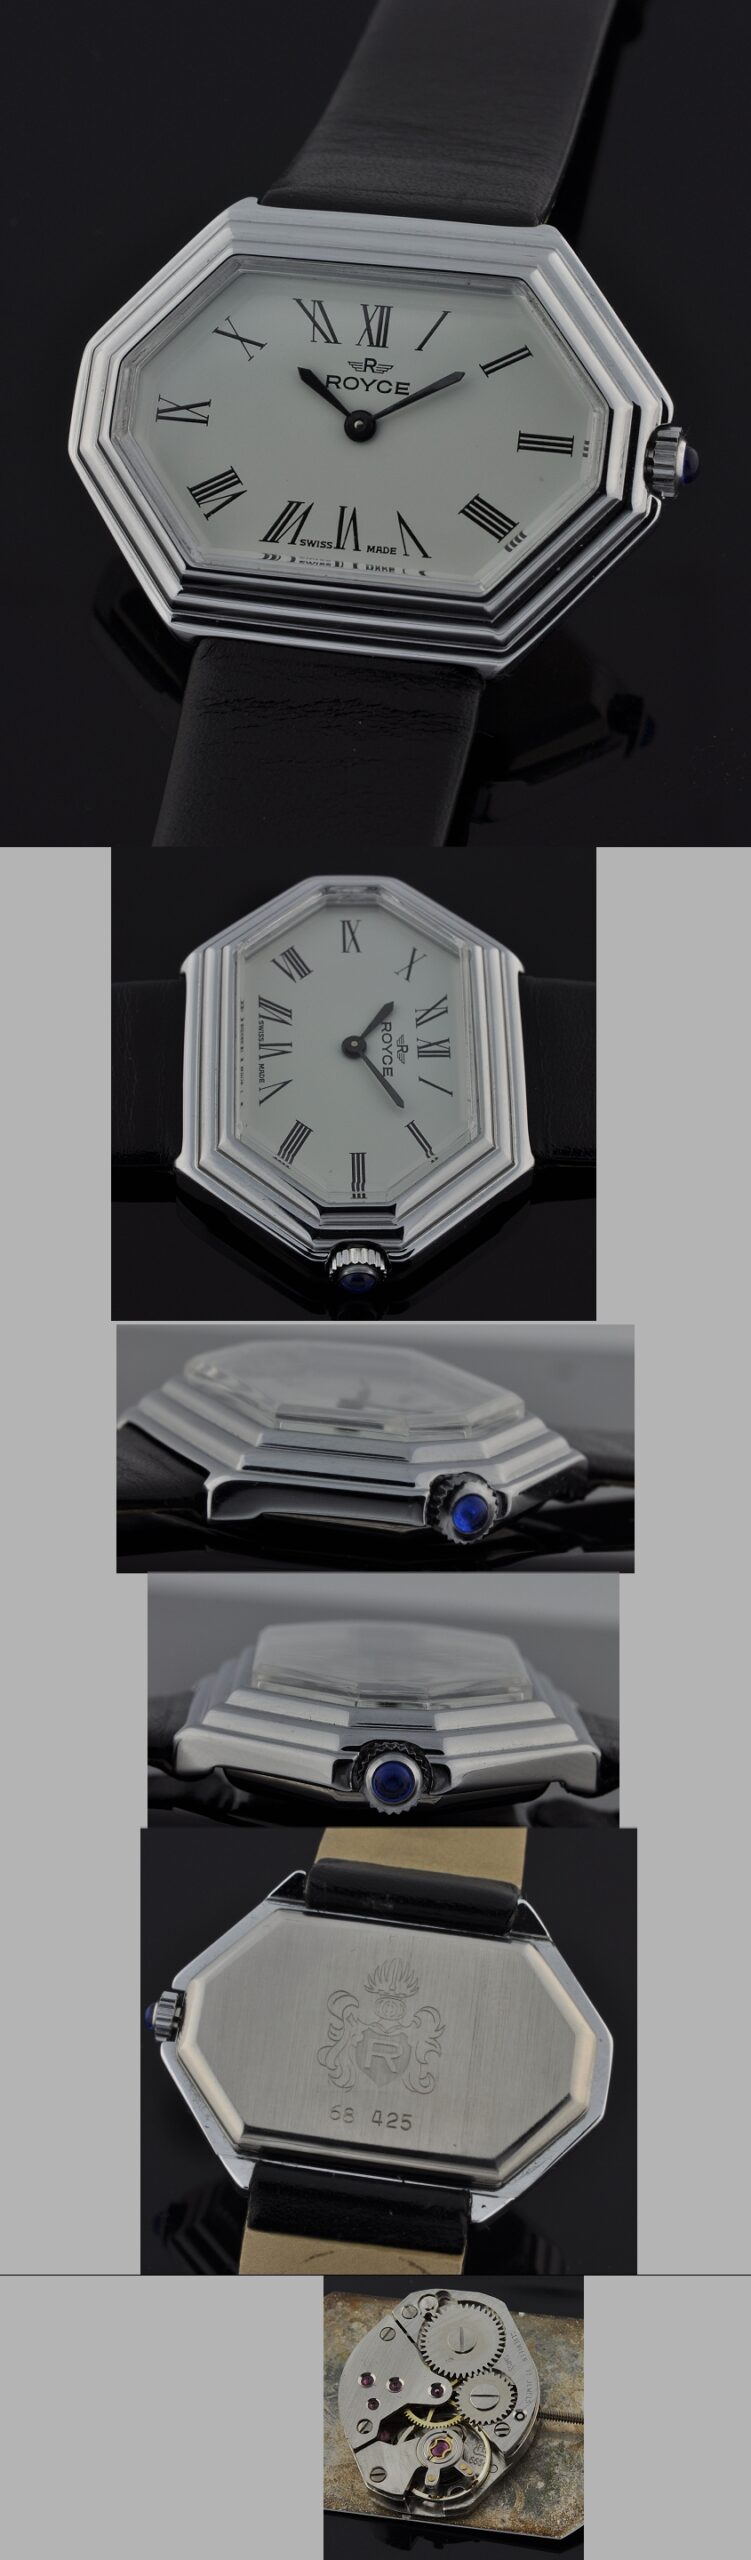 oclock watches made in italy quattro alumni boardshop madison wi